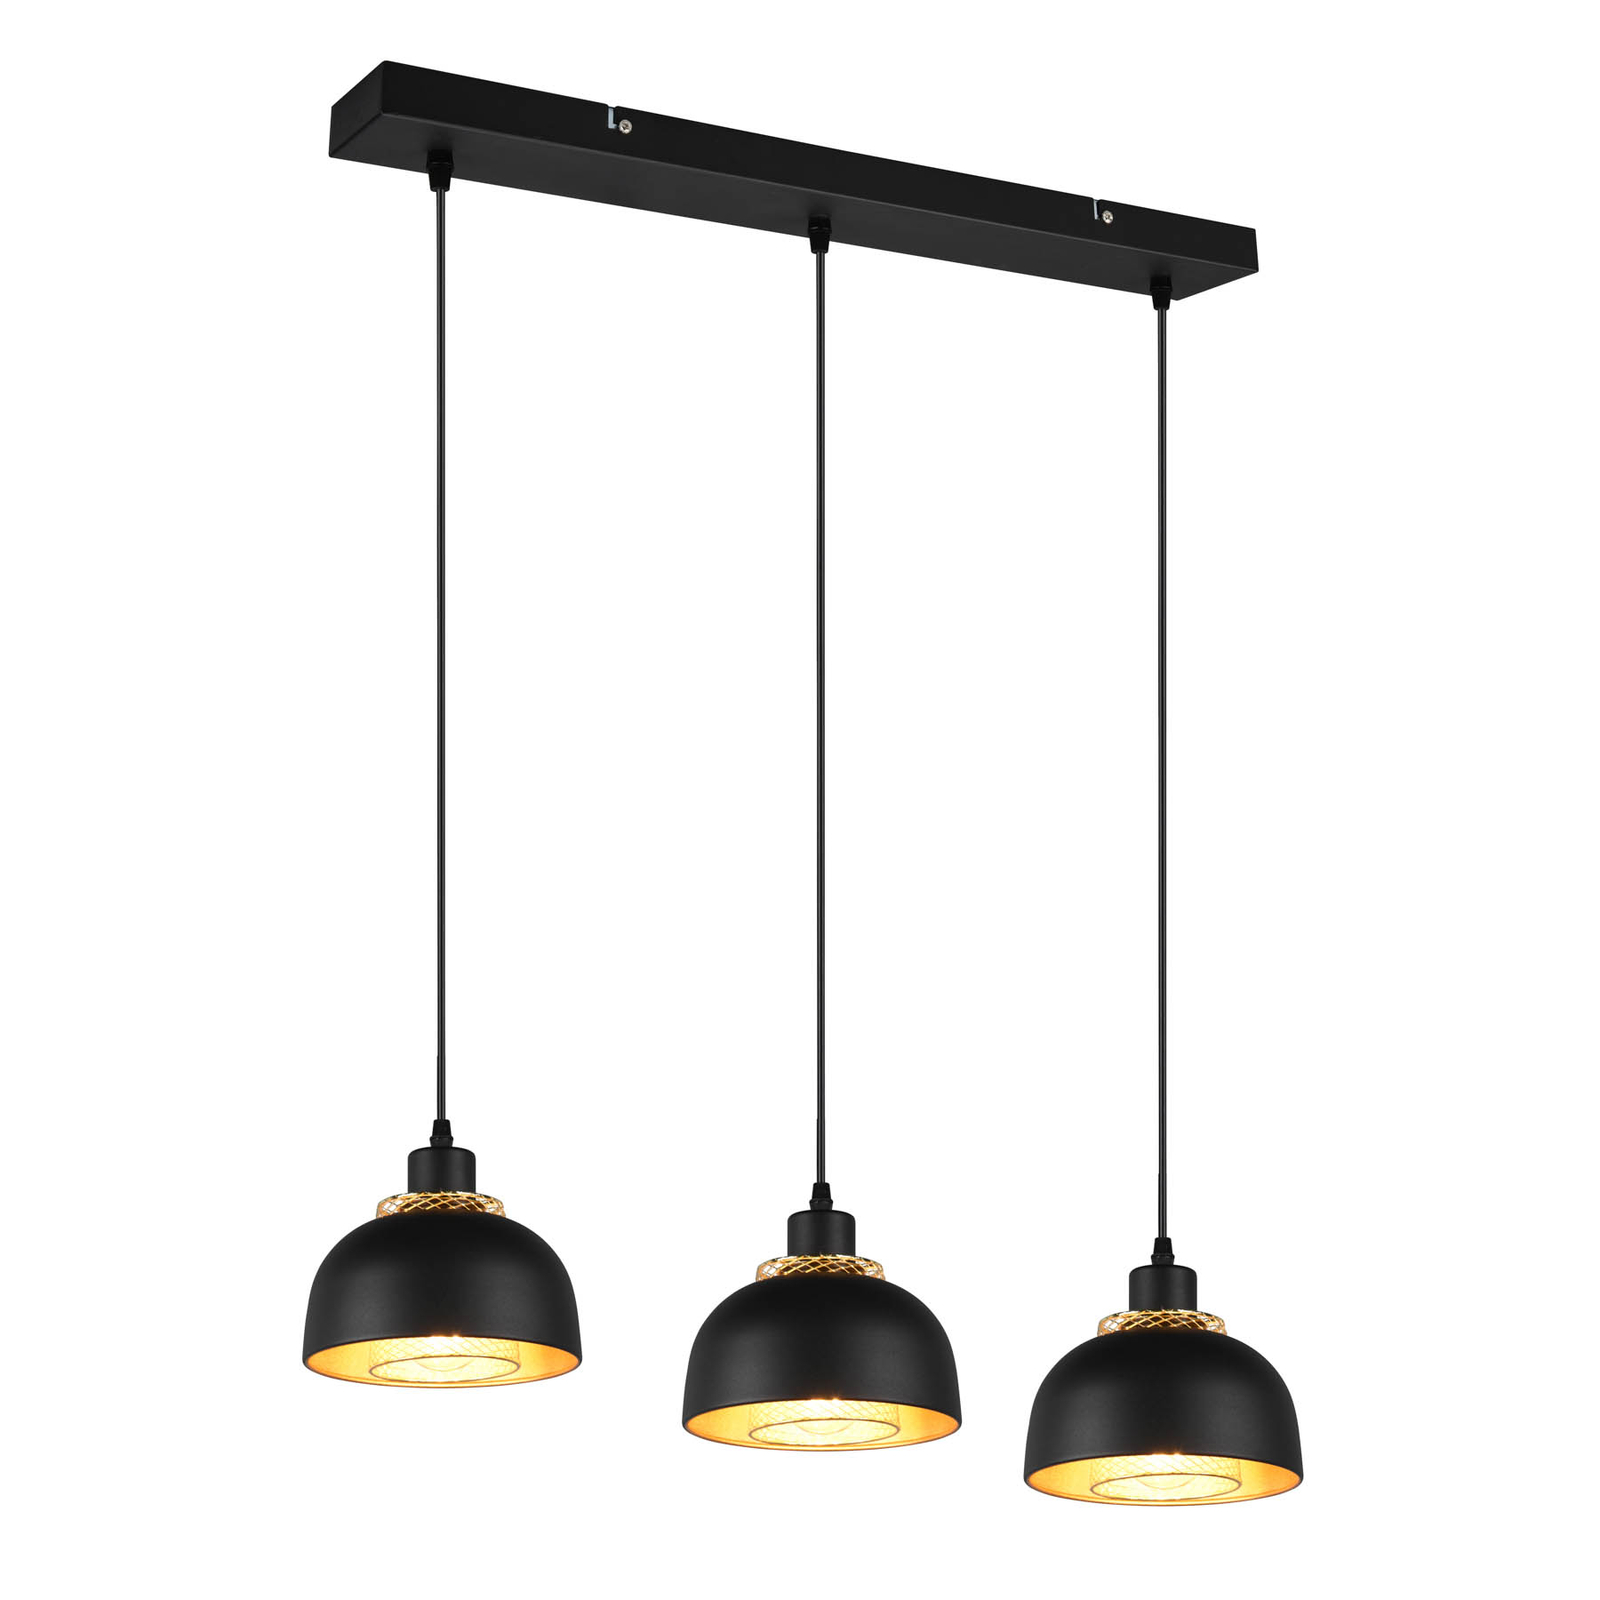 Punch pendant light, black/gold, three-bulb